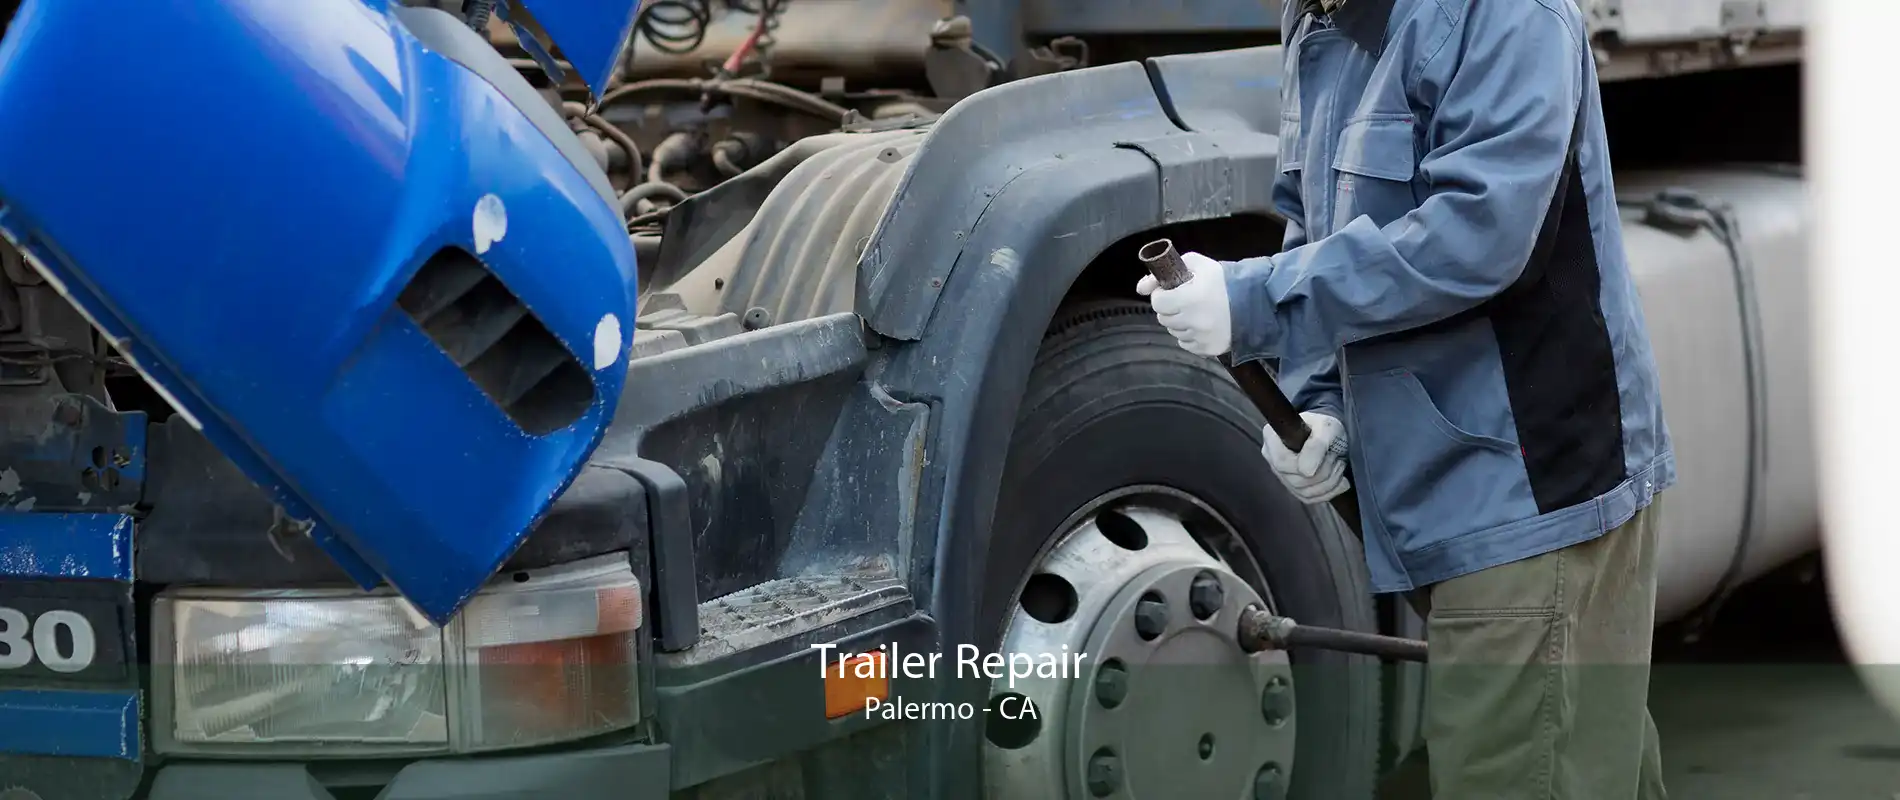 Trailer Repair Palermo - CA